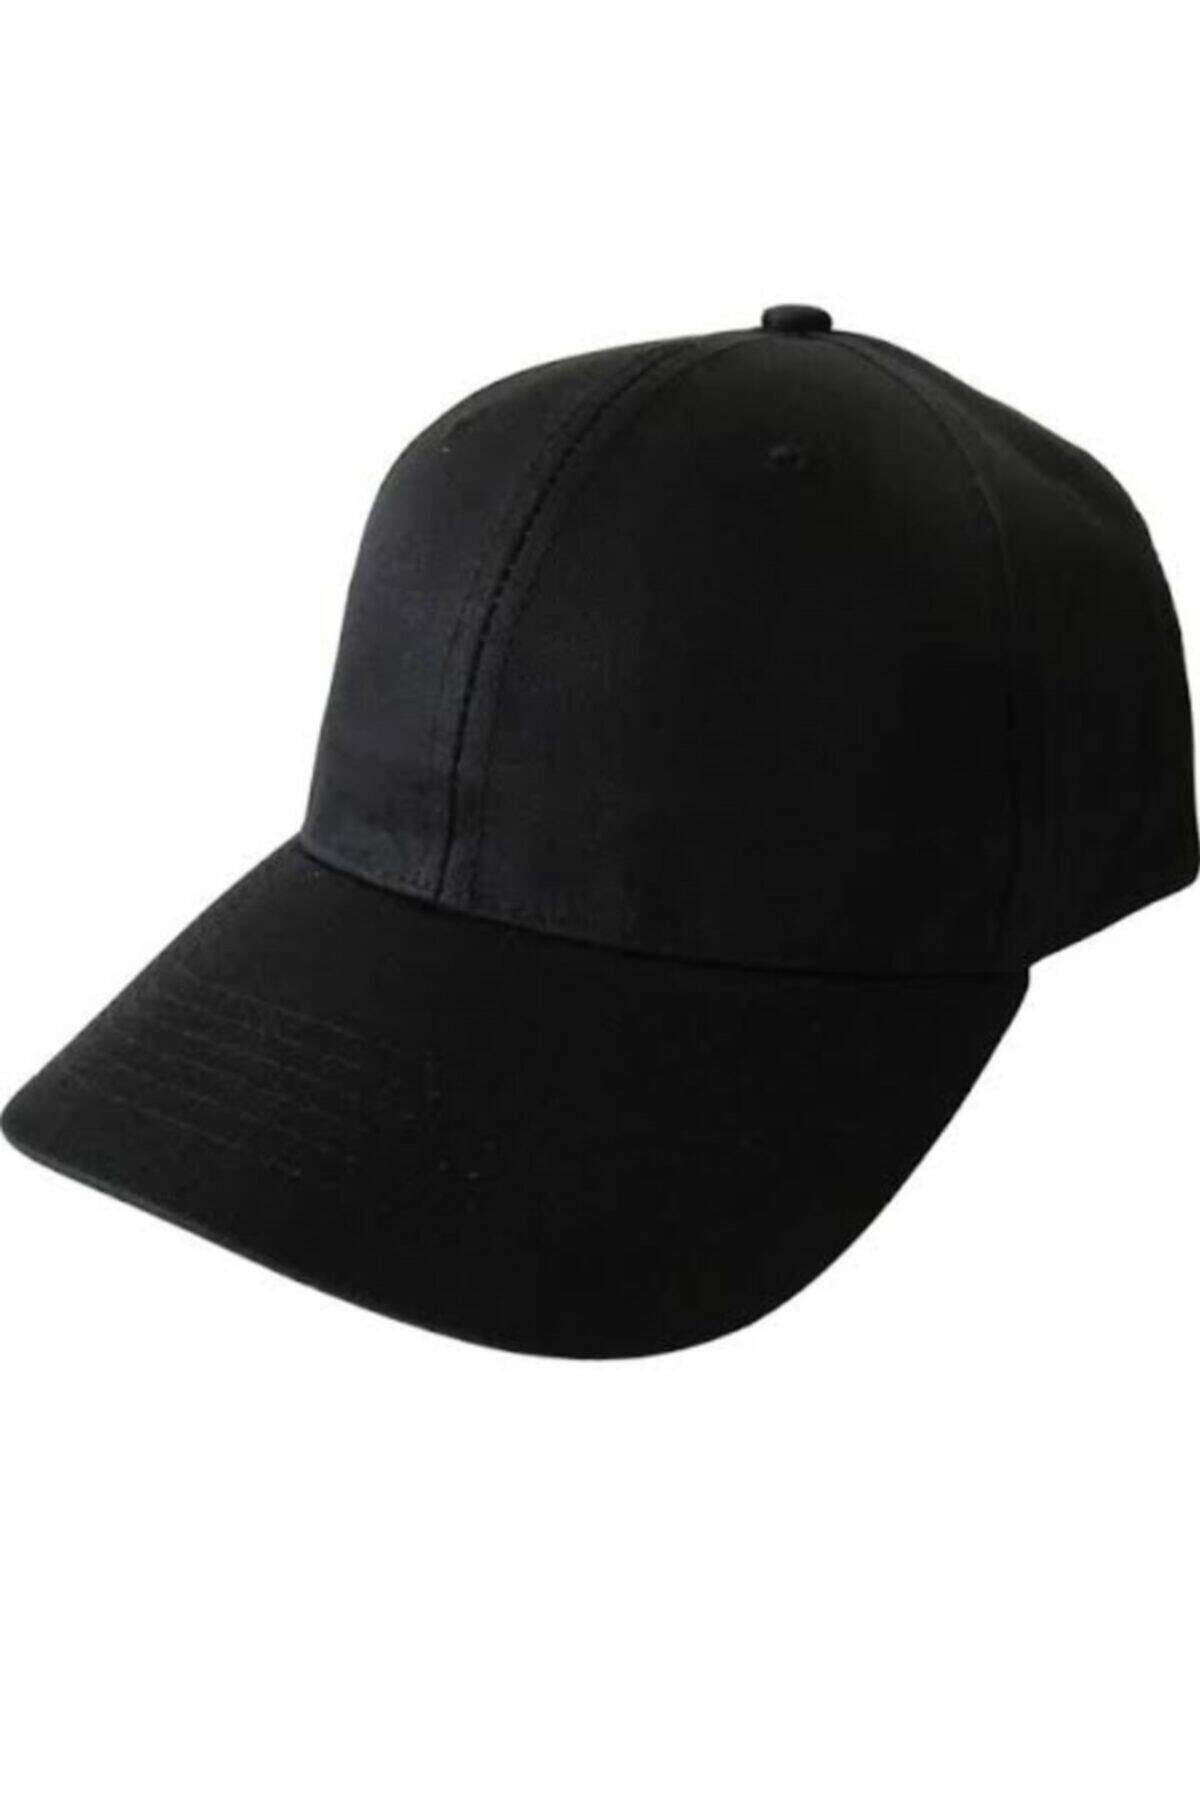 Zirve Unisex Siyah Şapka